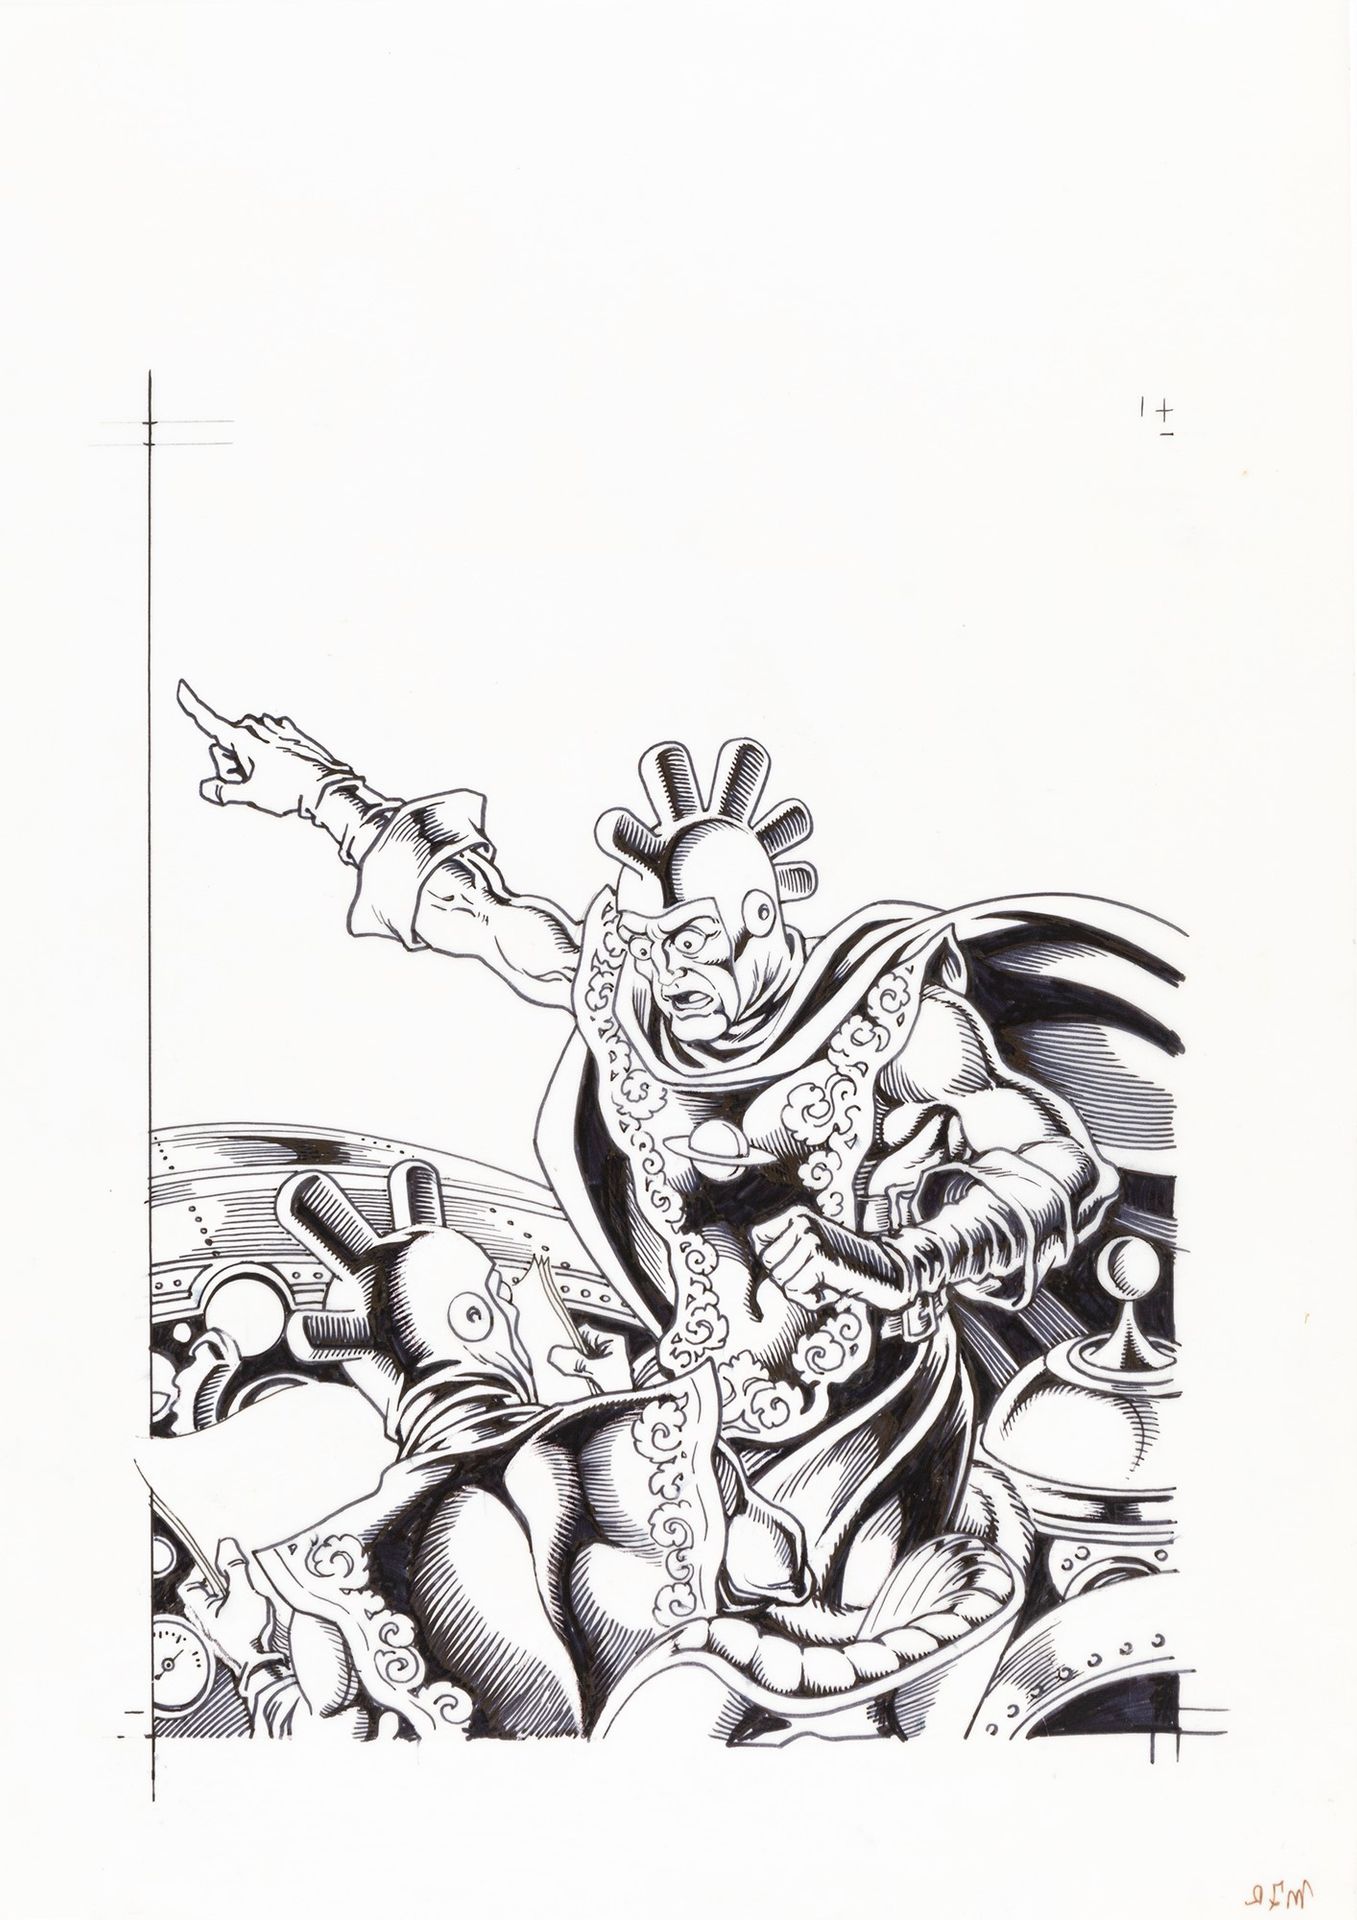 MAGNUS (ROBERTO RAVIOLA) Comic Art n. 77, 1991

墨水和毡尖笔在描图纸上
29,5 x 42 cm
马格努斯为19&hellip;